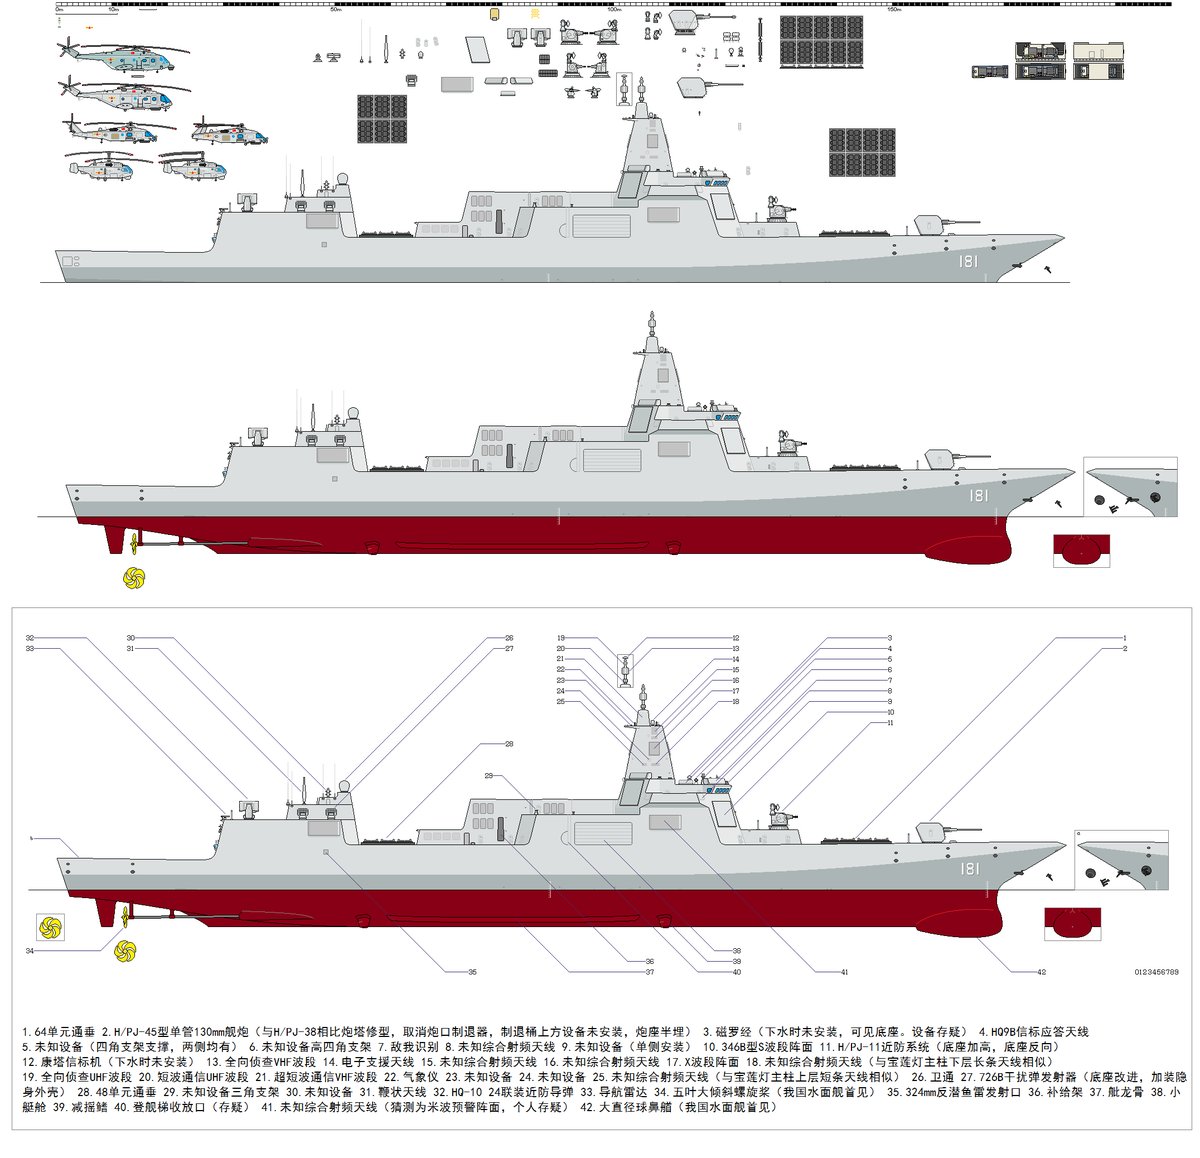 PLN Type 055 DDG diagram.jpg